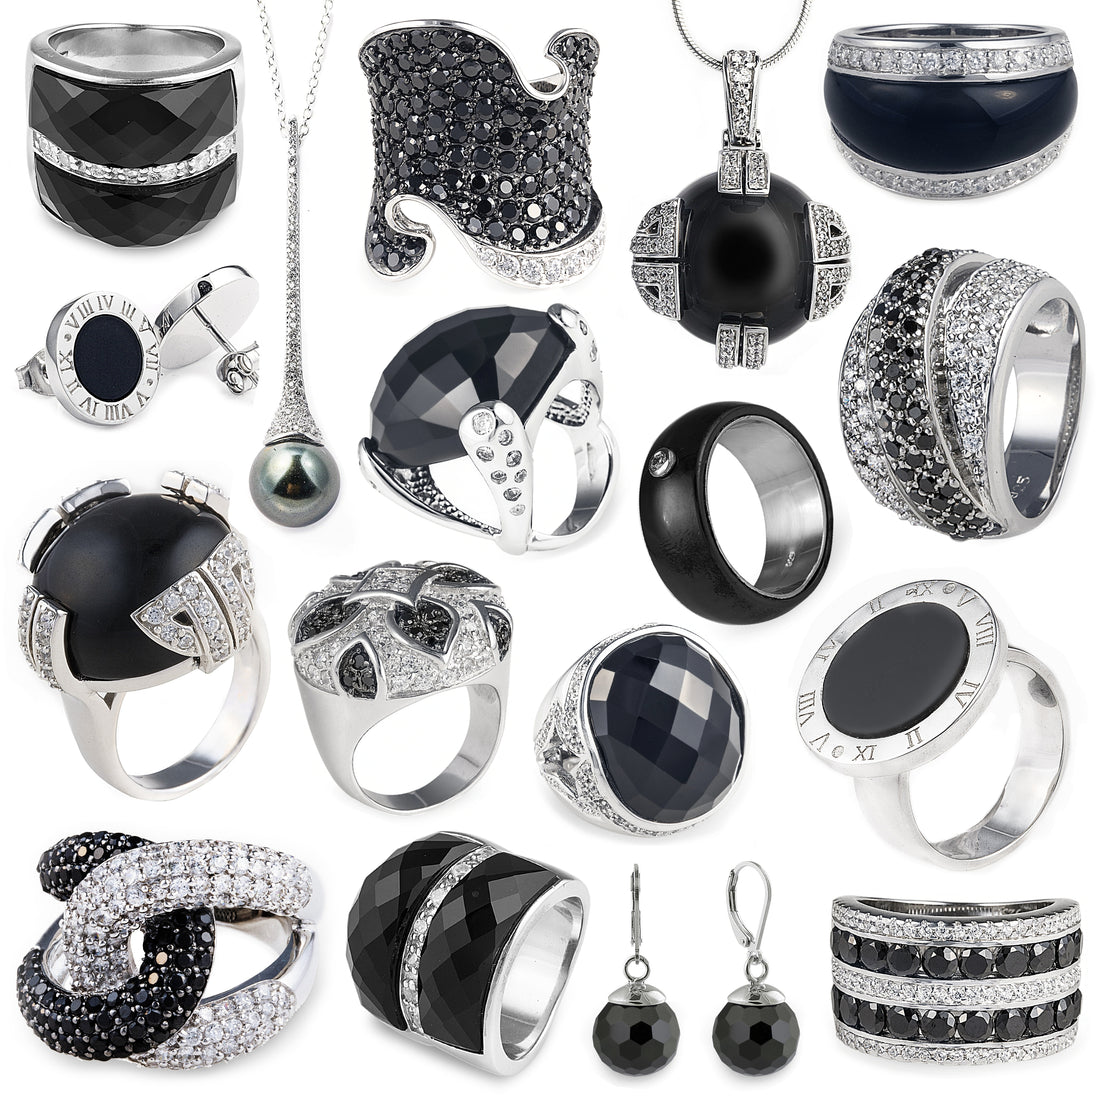 Bellagio & Co Sterling Silver Jewellery Australia. Worldwide shipping